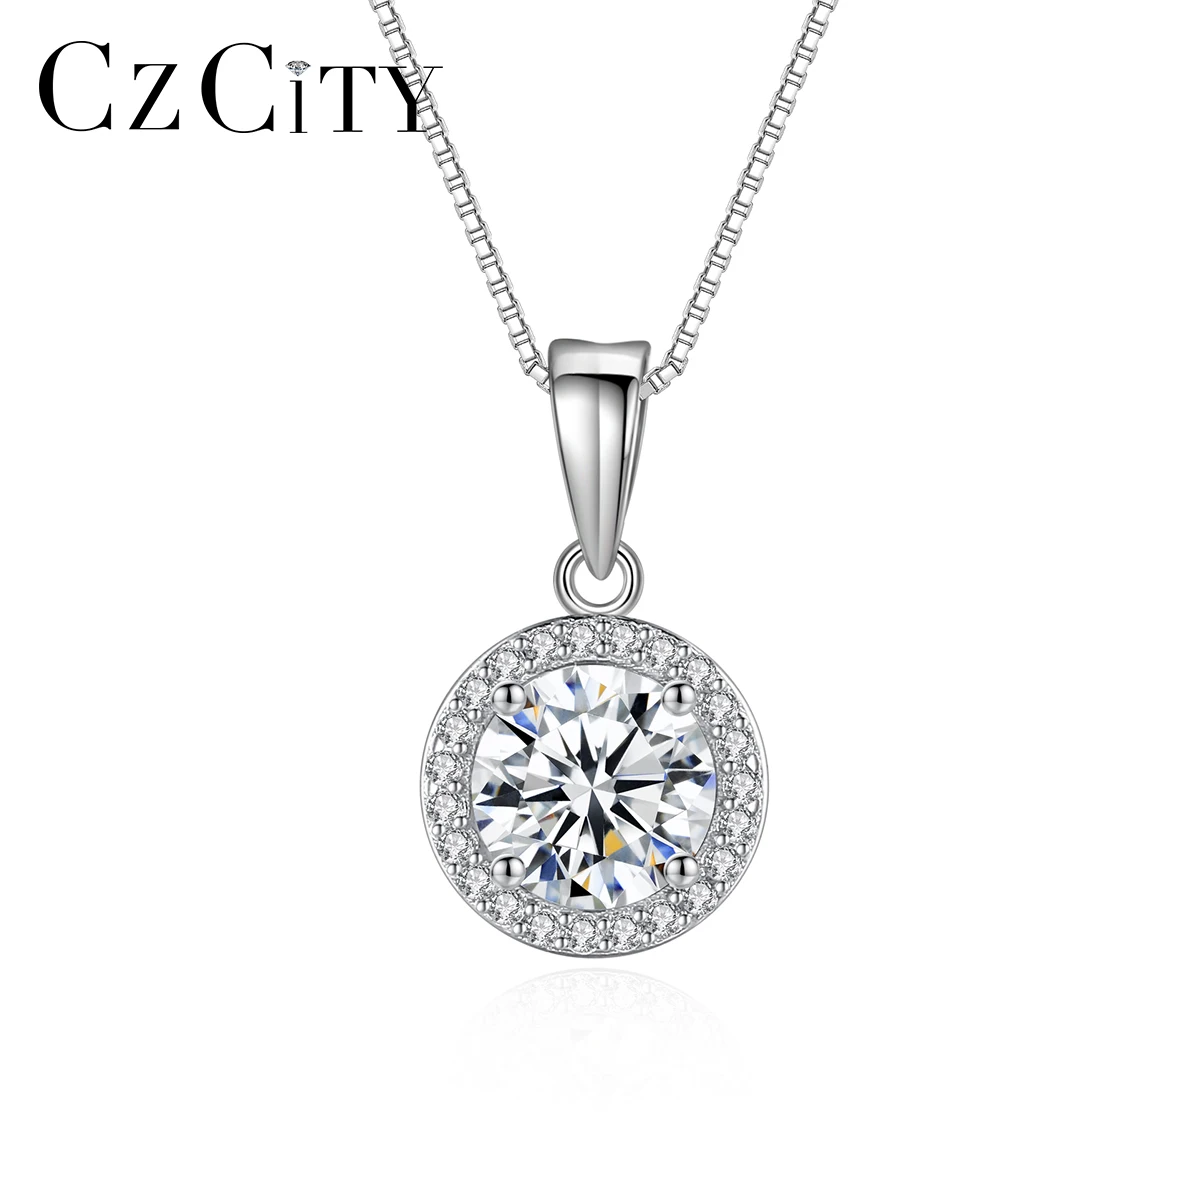 

CZCITY Round Disc Necklace Sterling Silver Chain Diamond Custom Charm Designer New VVS Moissanite Pendant